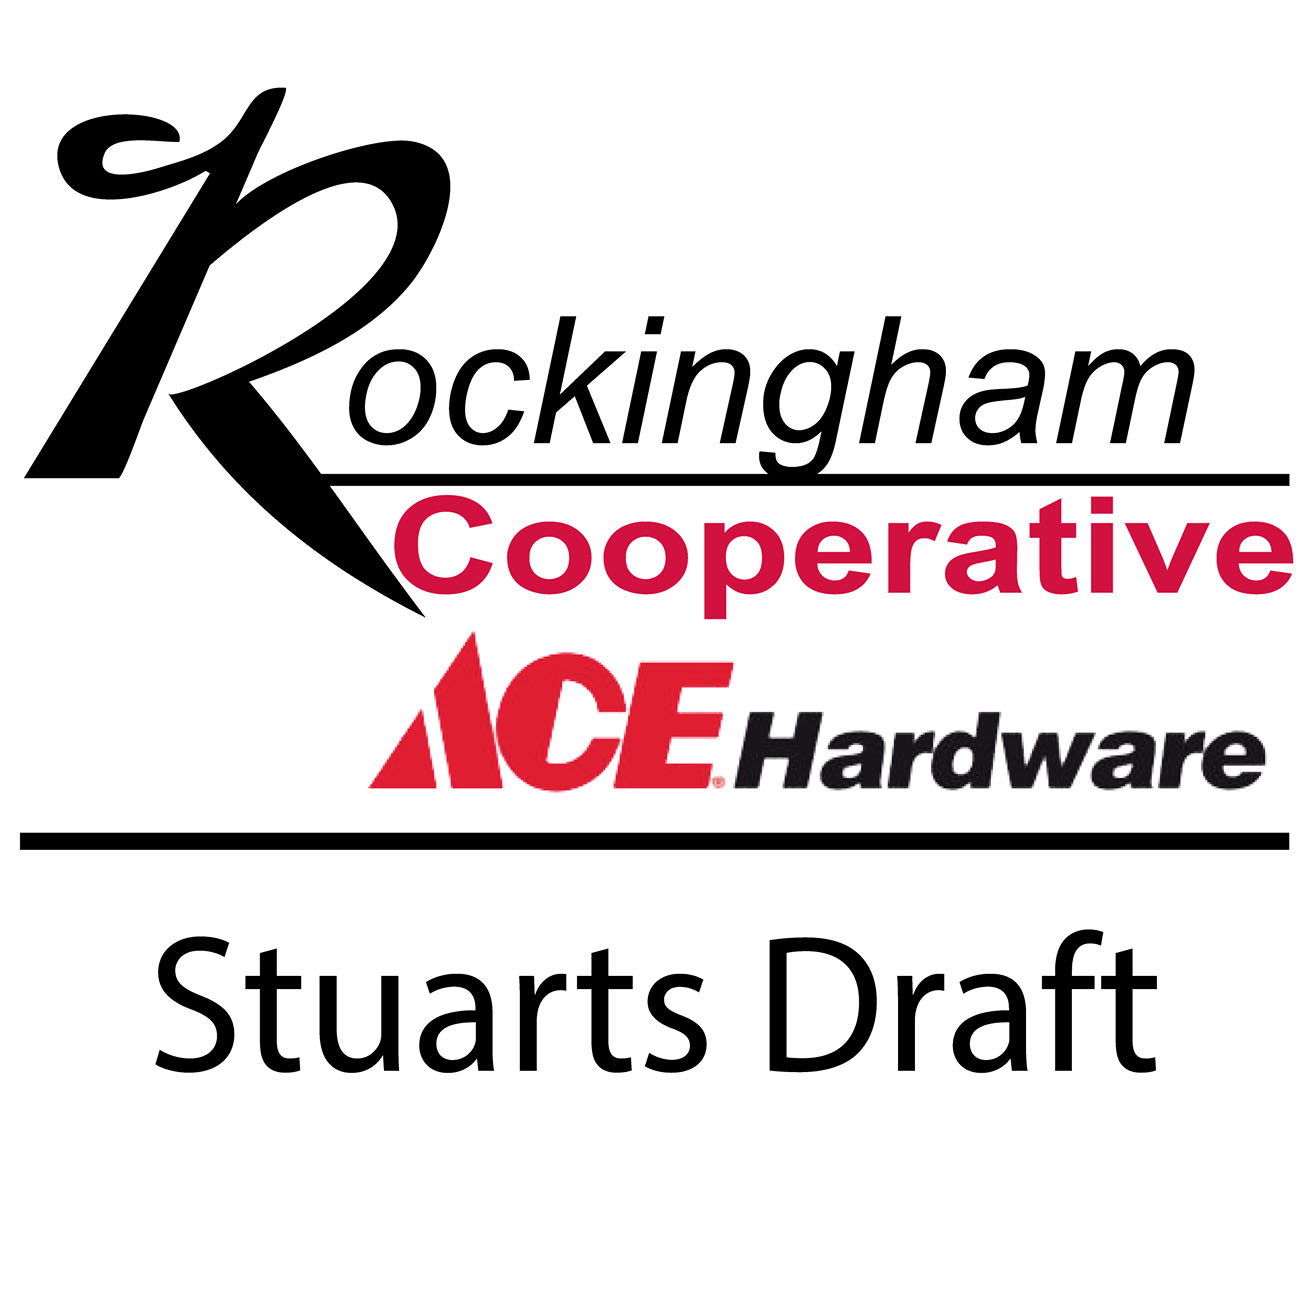 Rockingham Coop-Ace Hardware